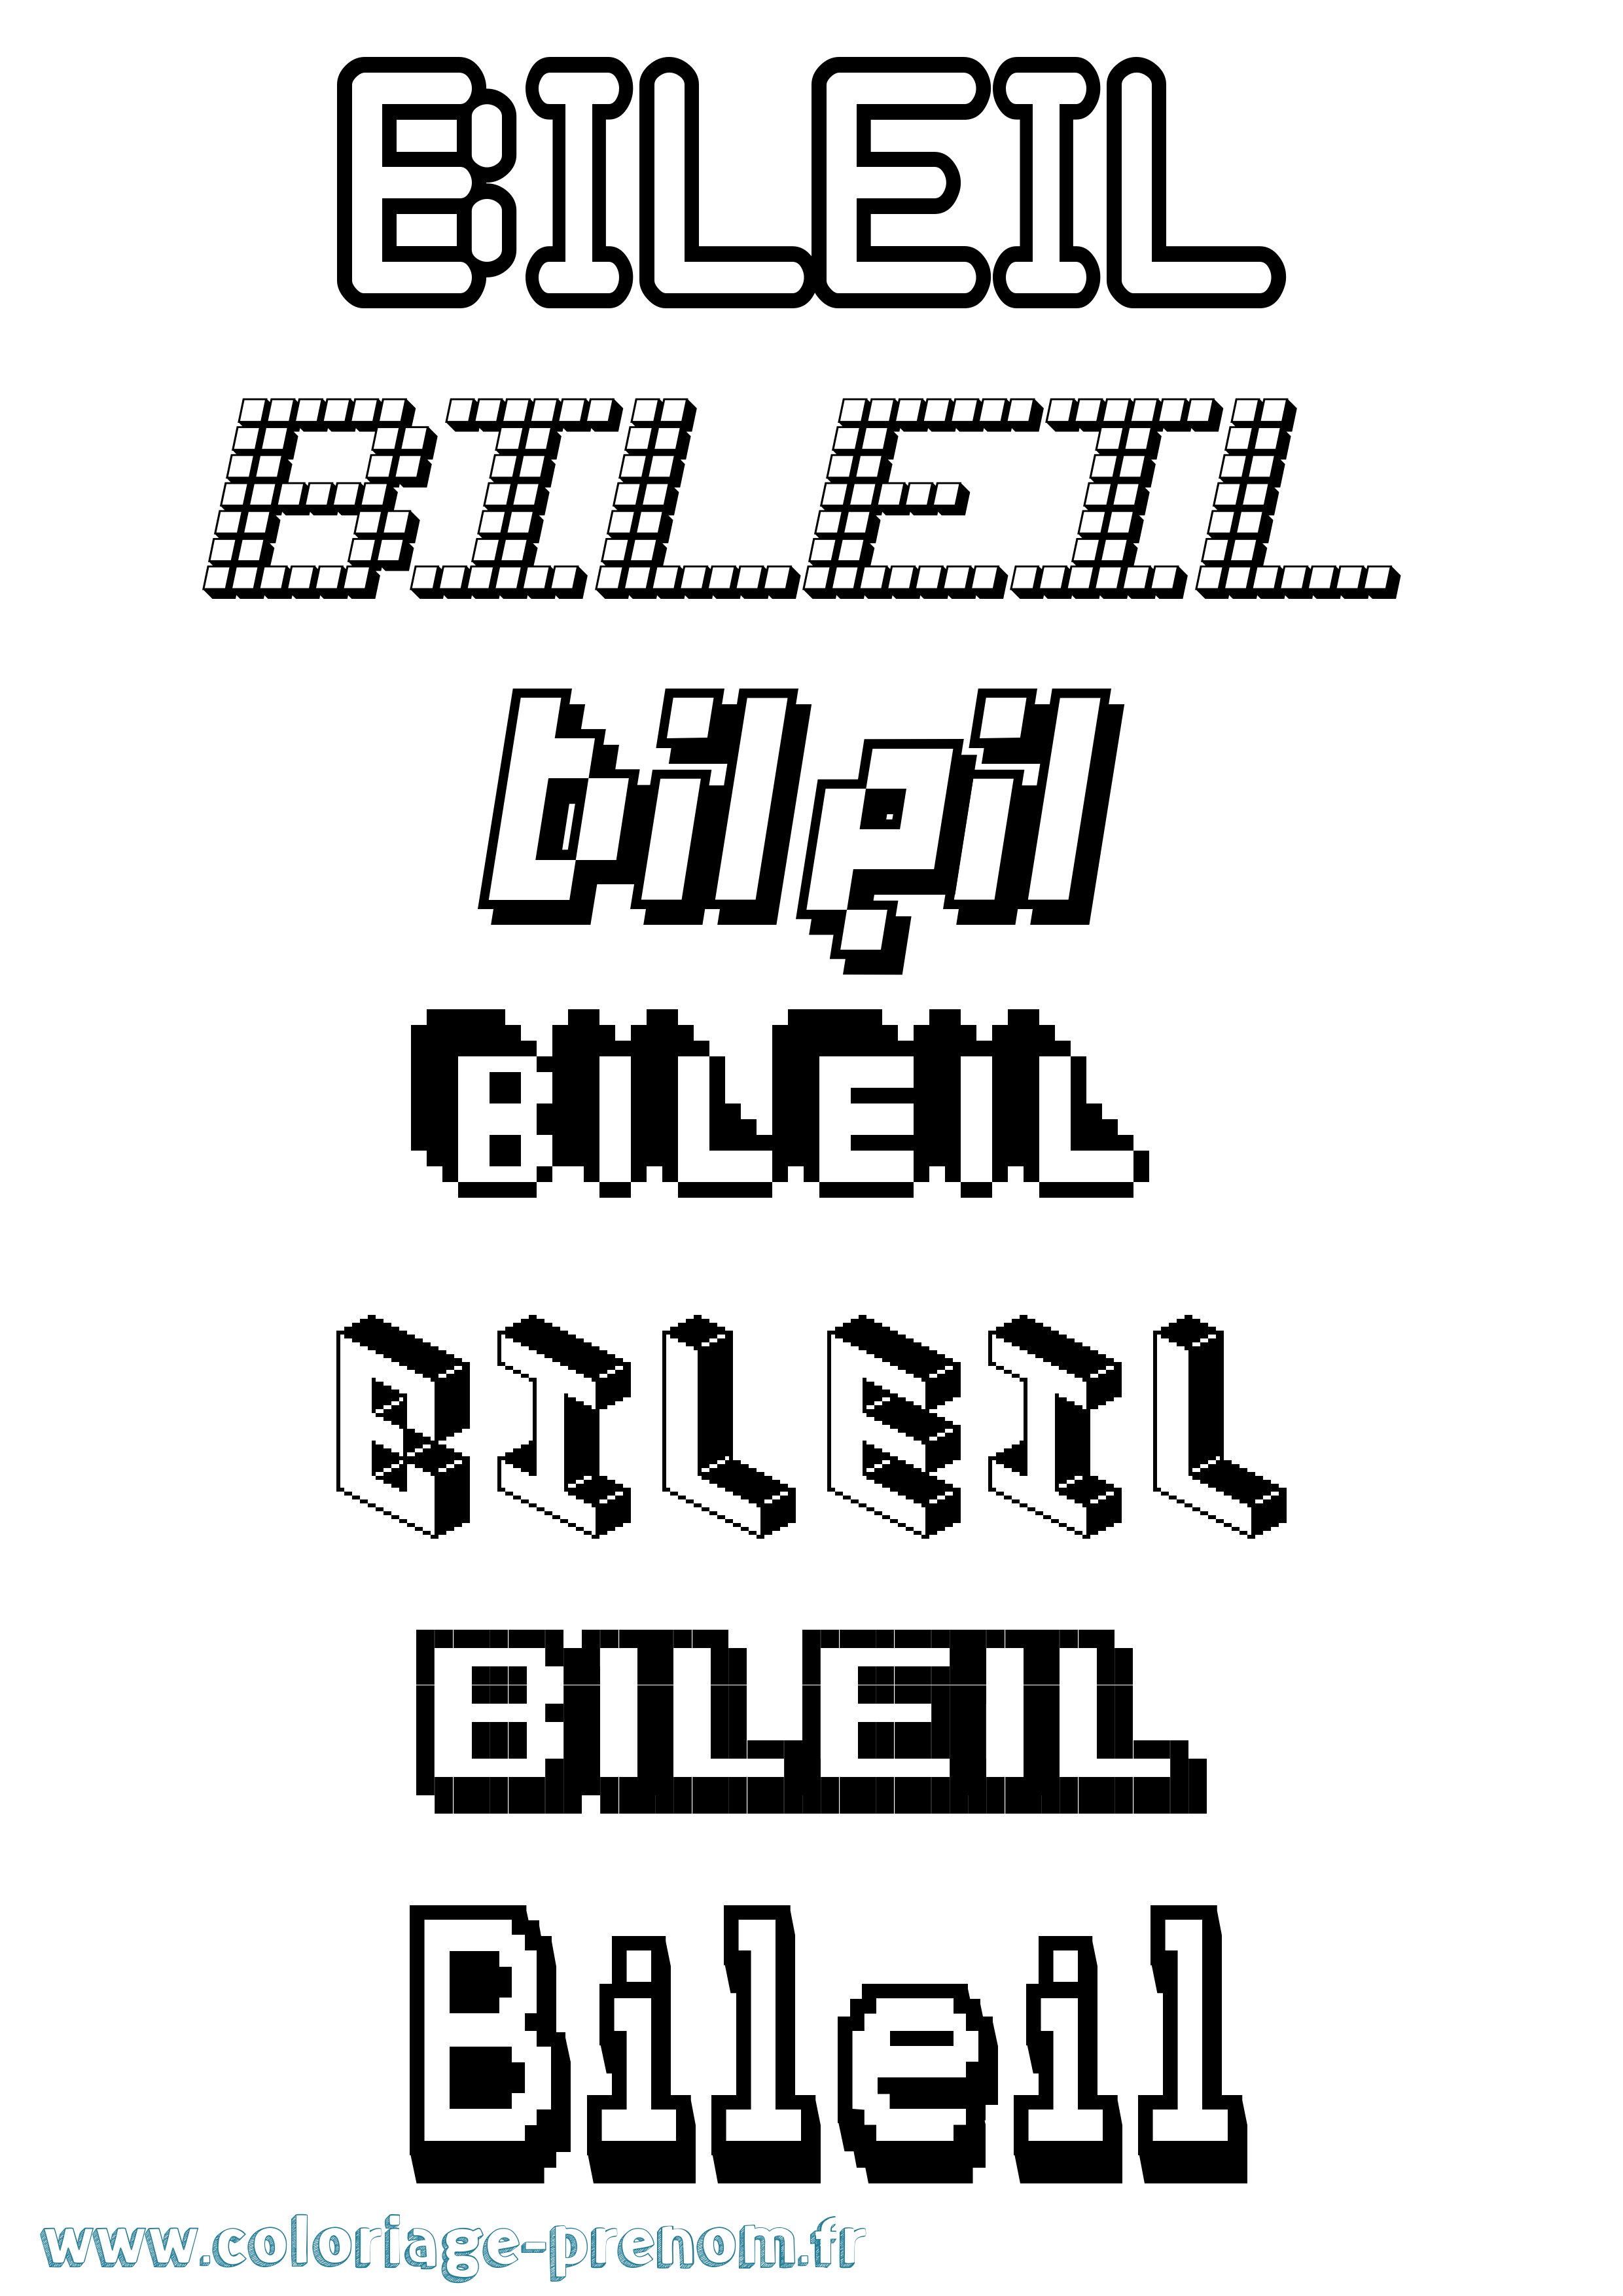 Coloriage prénom Bileil Pixel